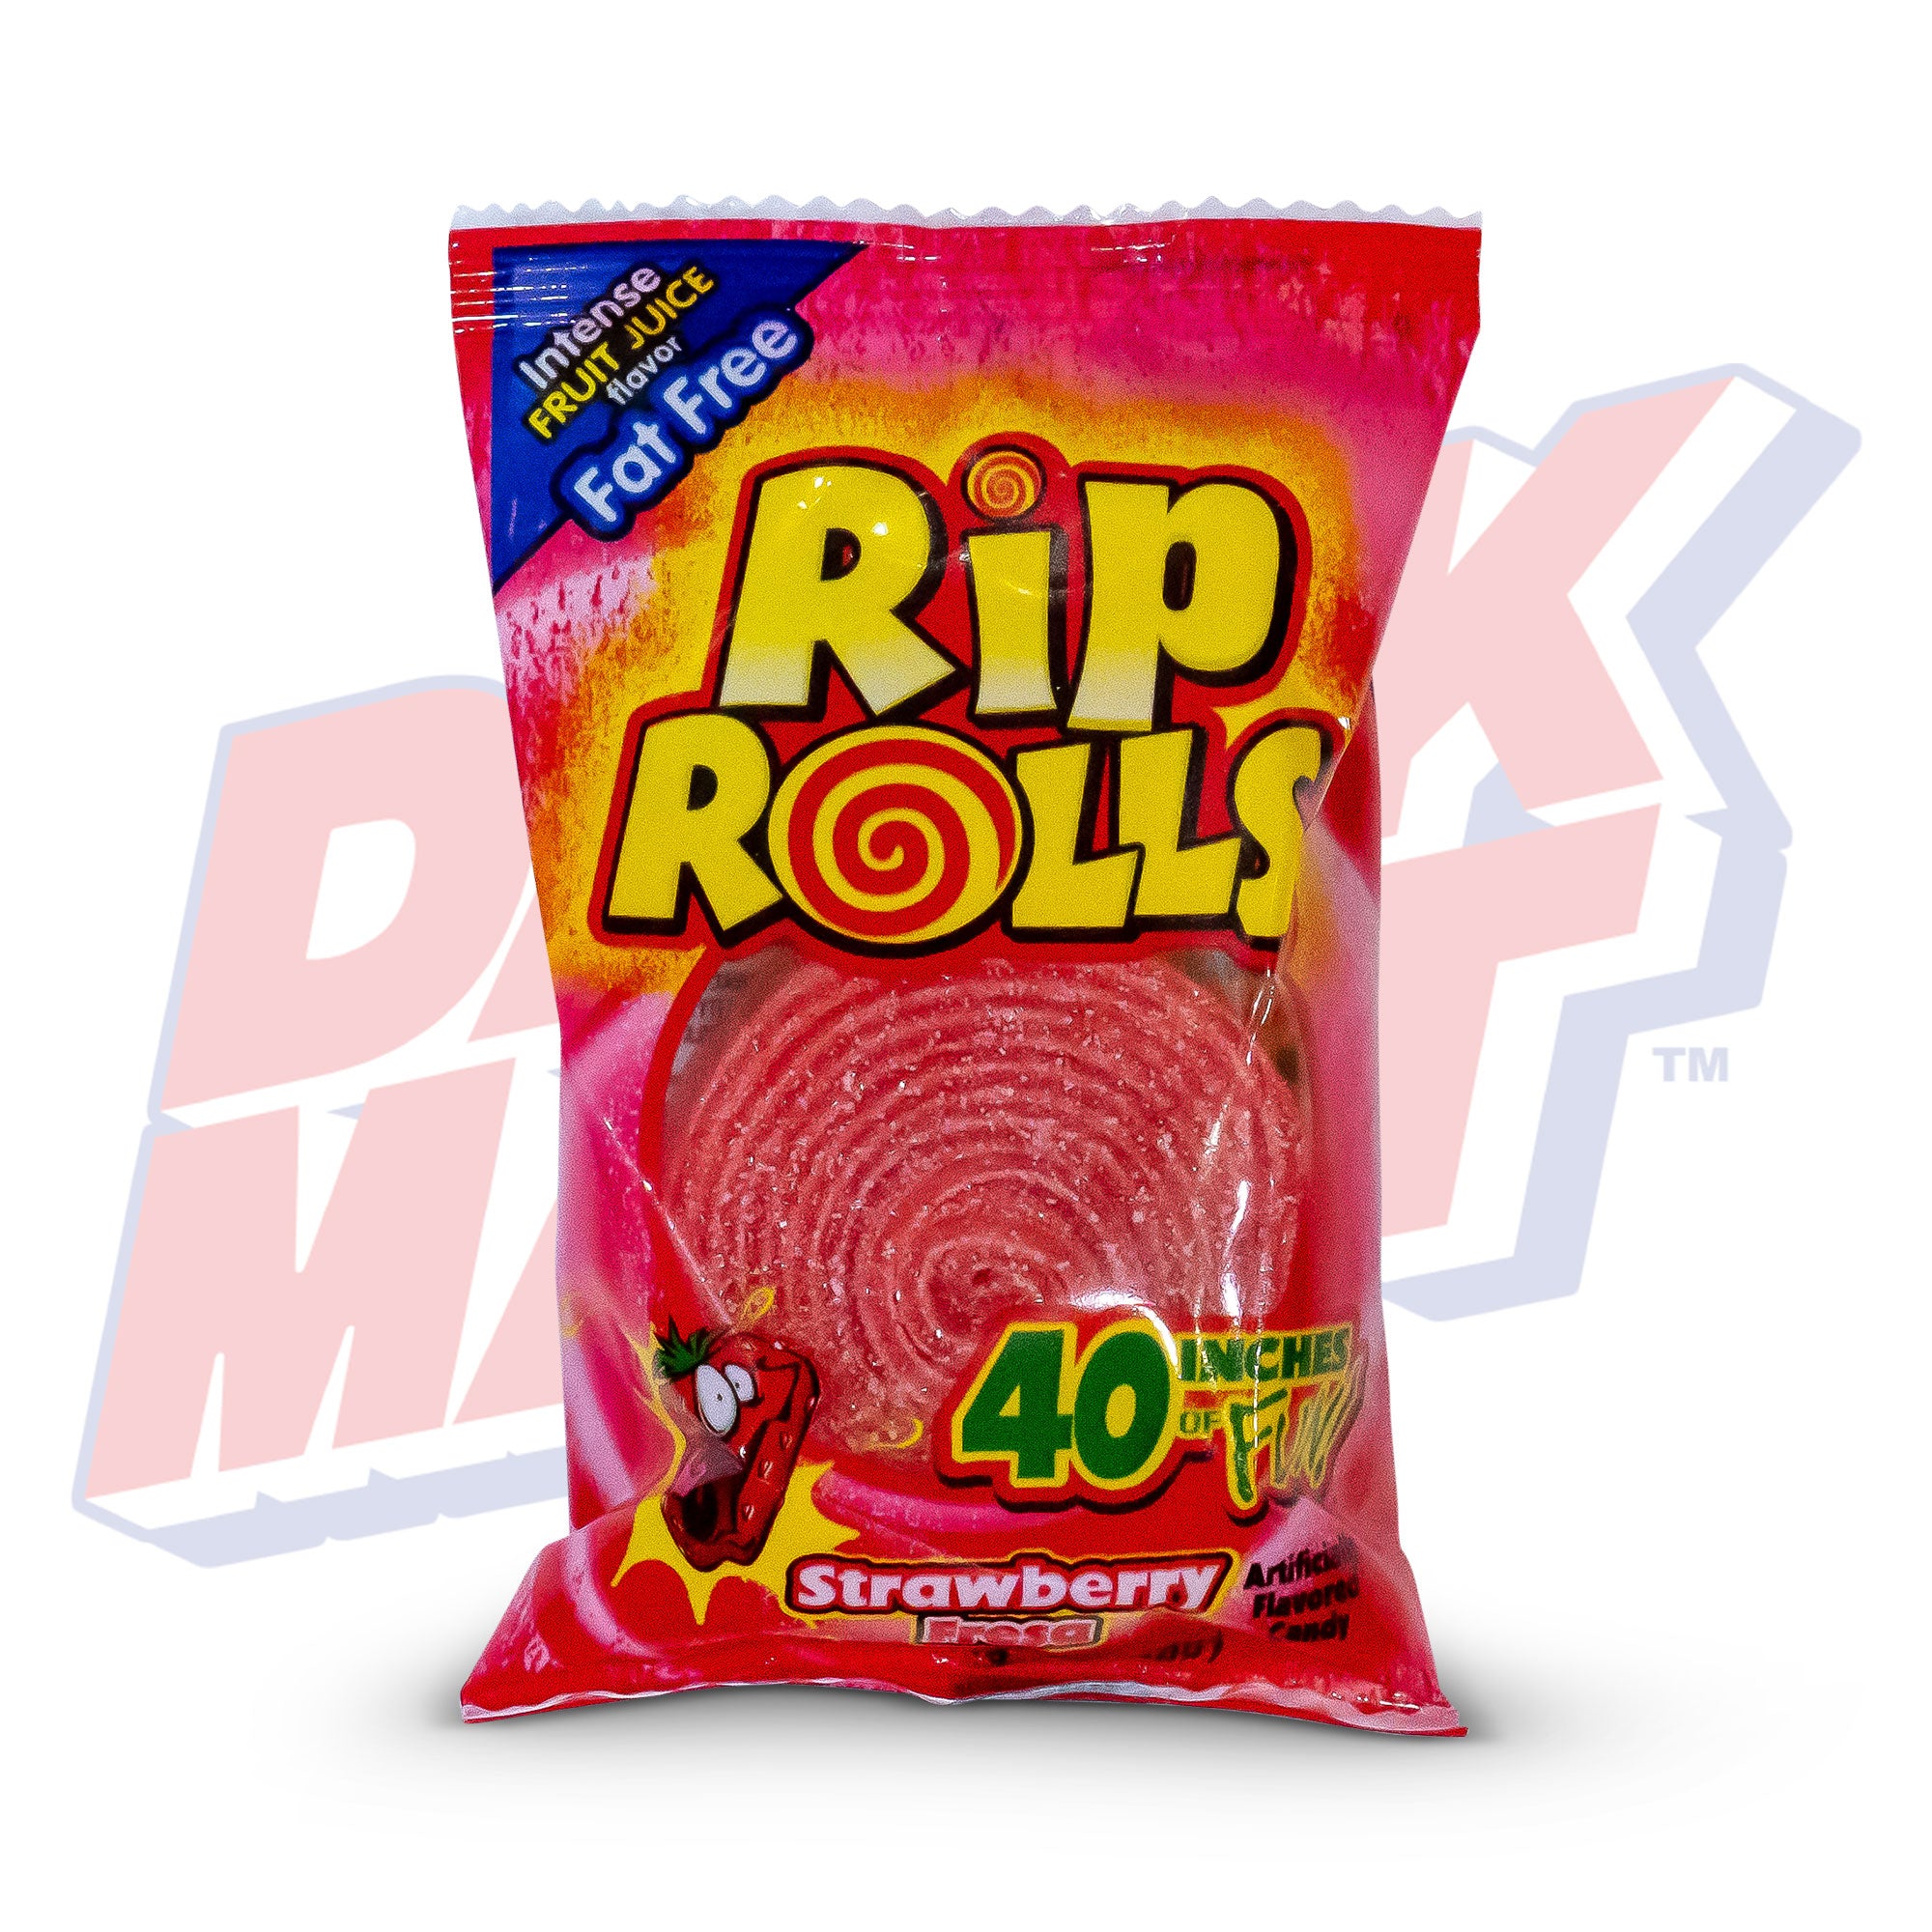 Rips Rolls Strawberry - 1.4oz